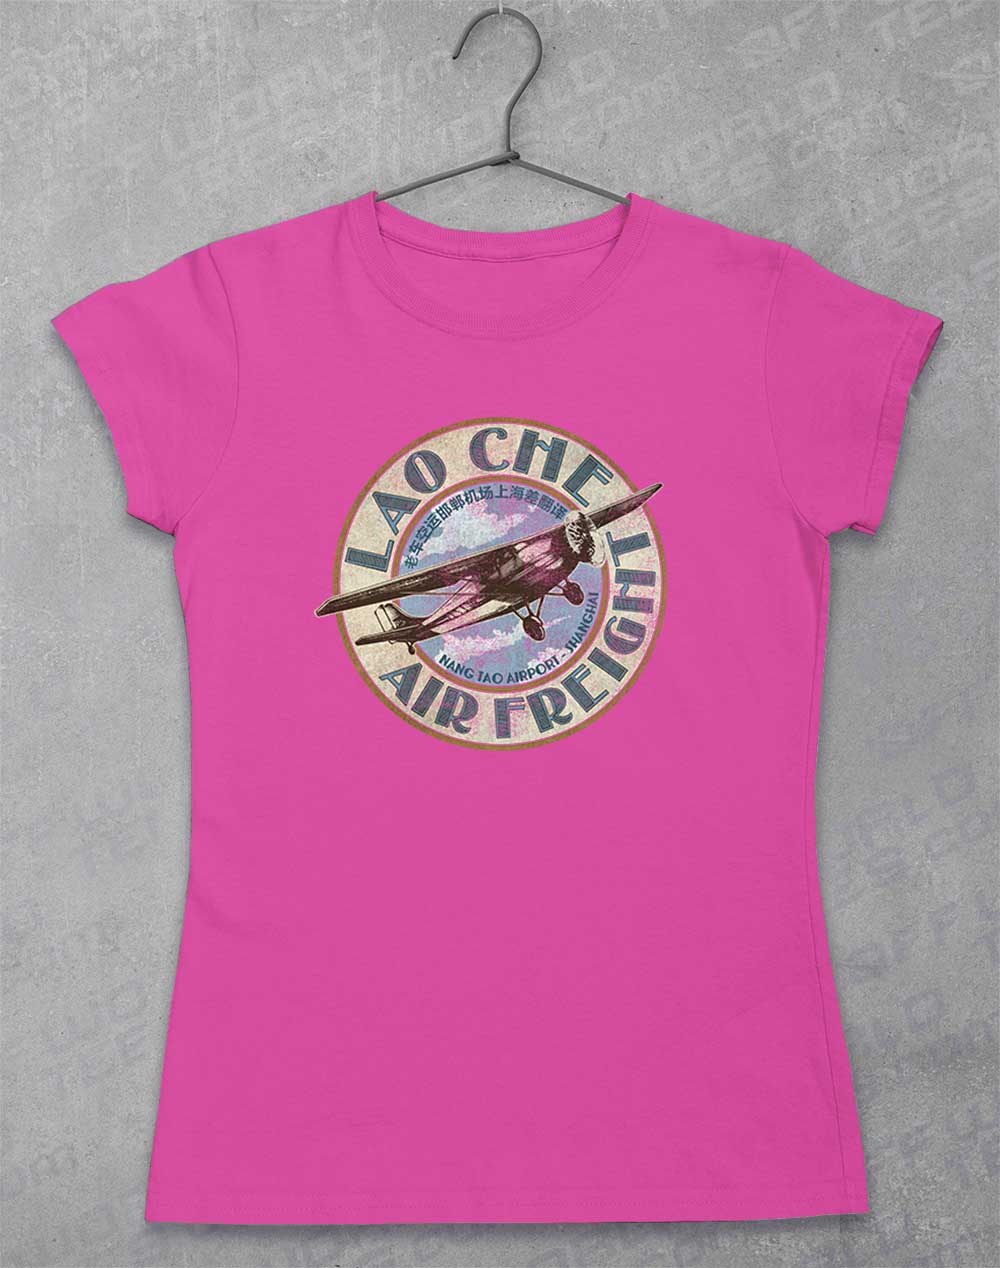 Azalea - Lao Che Air Freight Women's T-Shirt